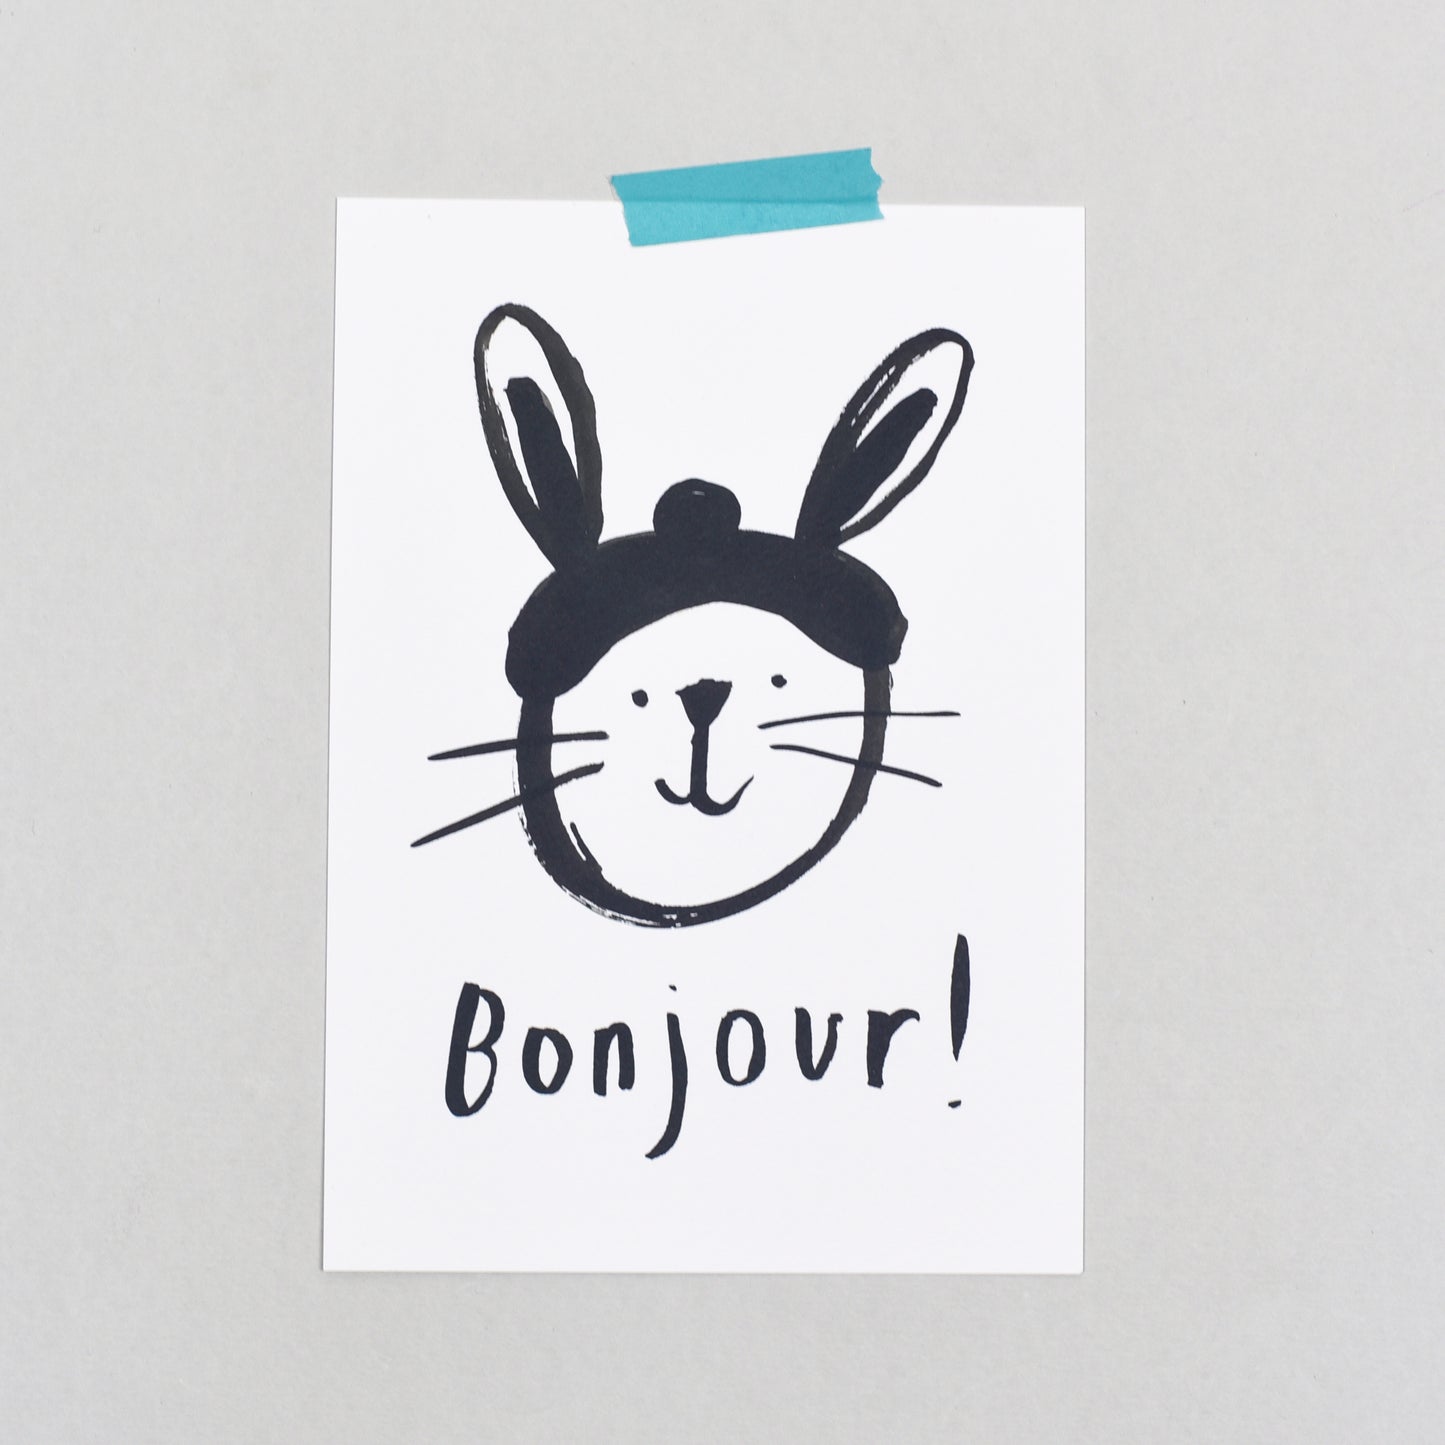 'Bonjour Rabbit' monochrome print